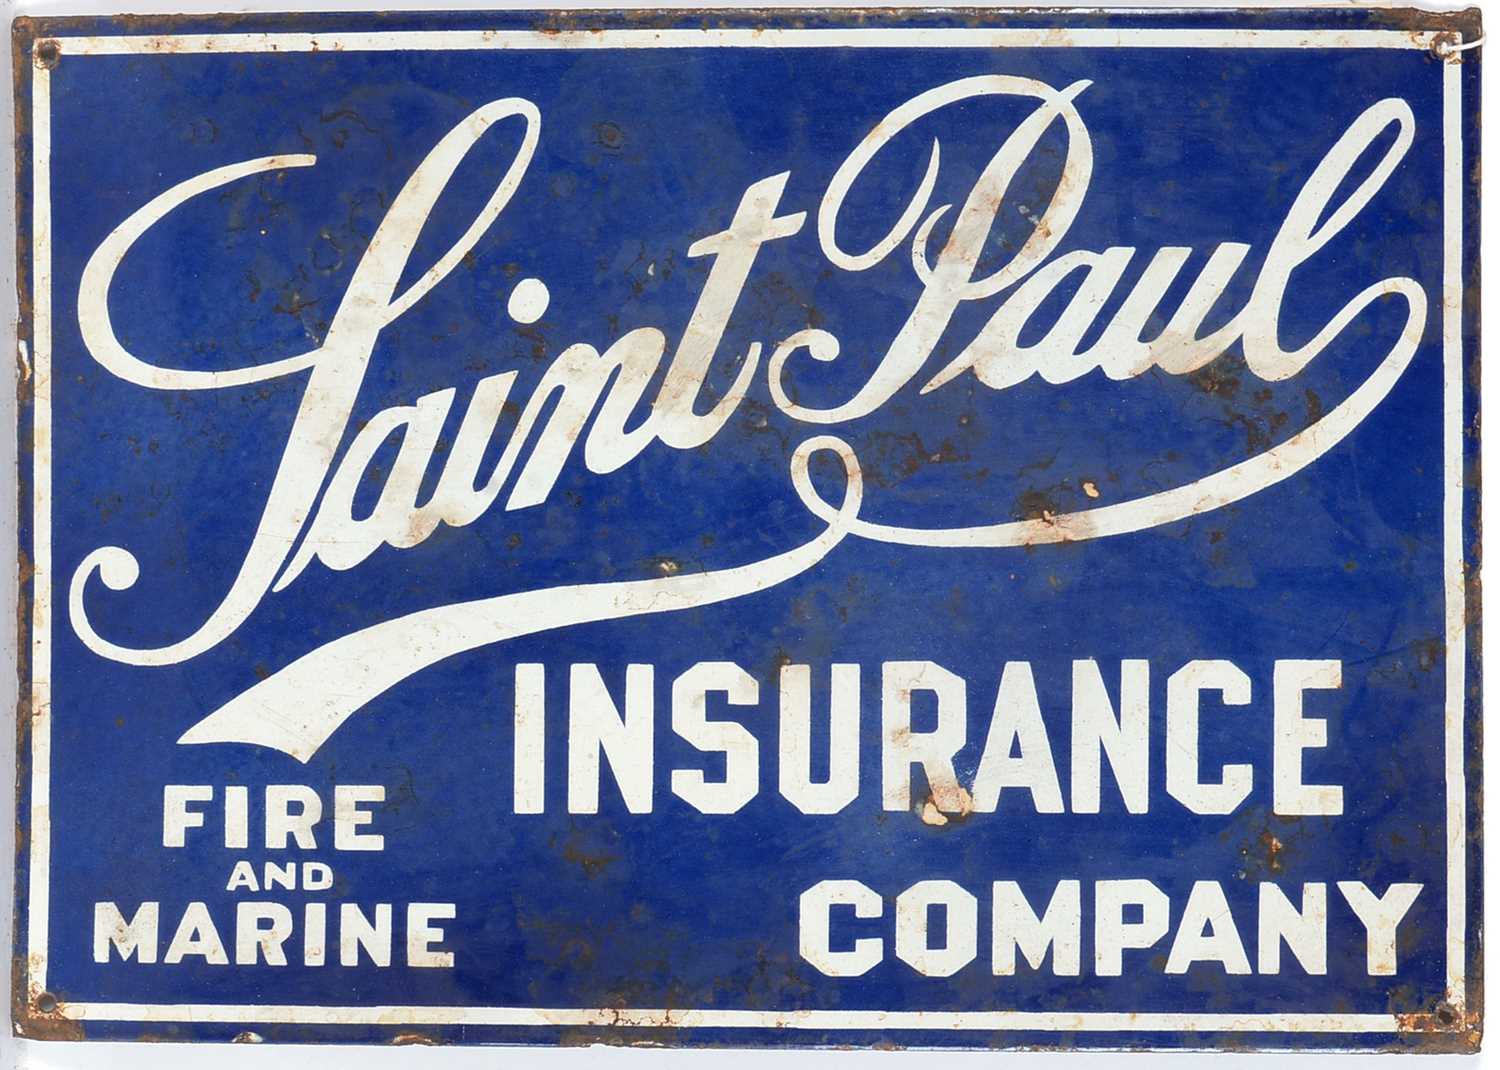 Saint Paul Insurance Company enamel advertising sign - Image 2 of 3